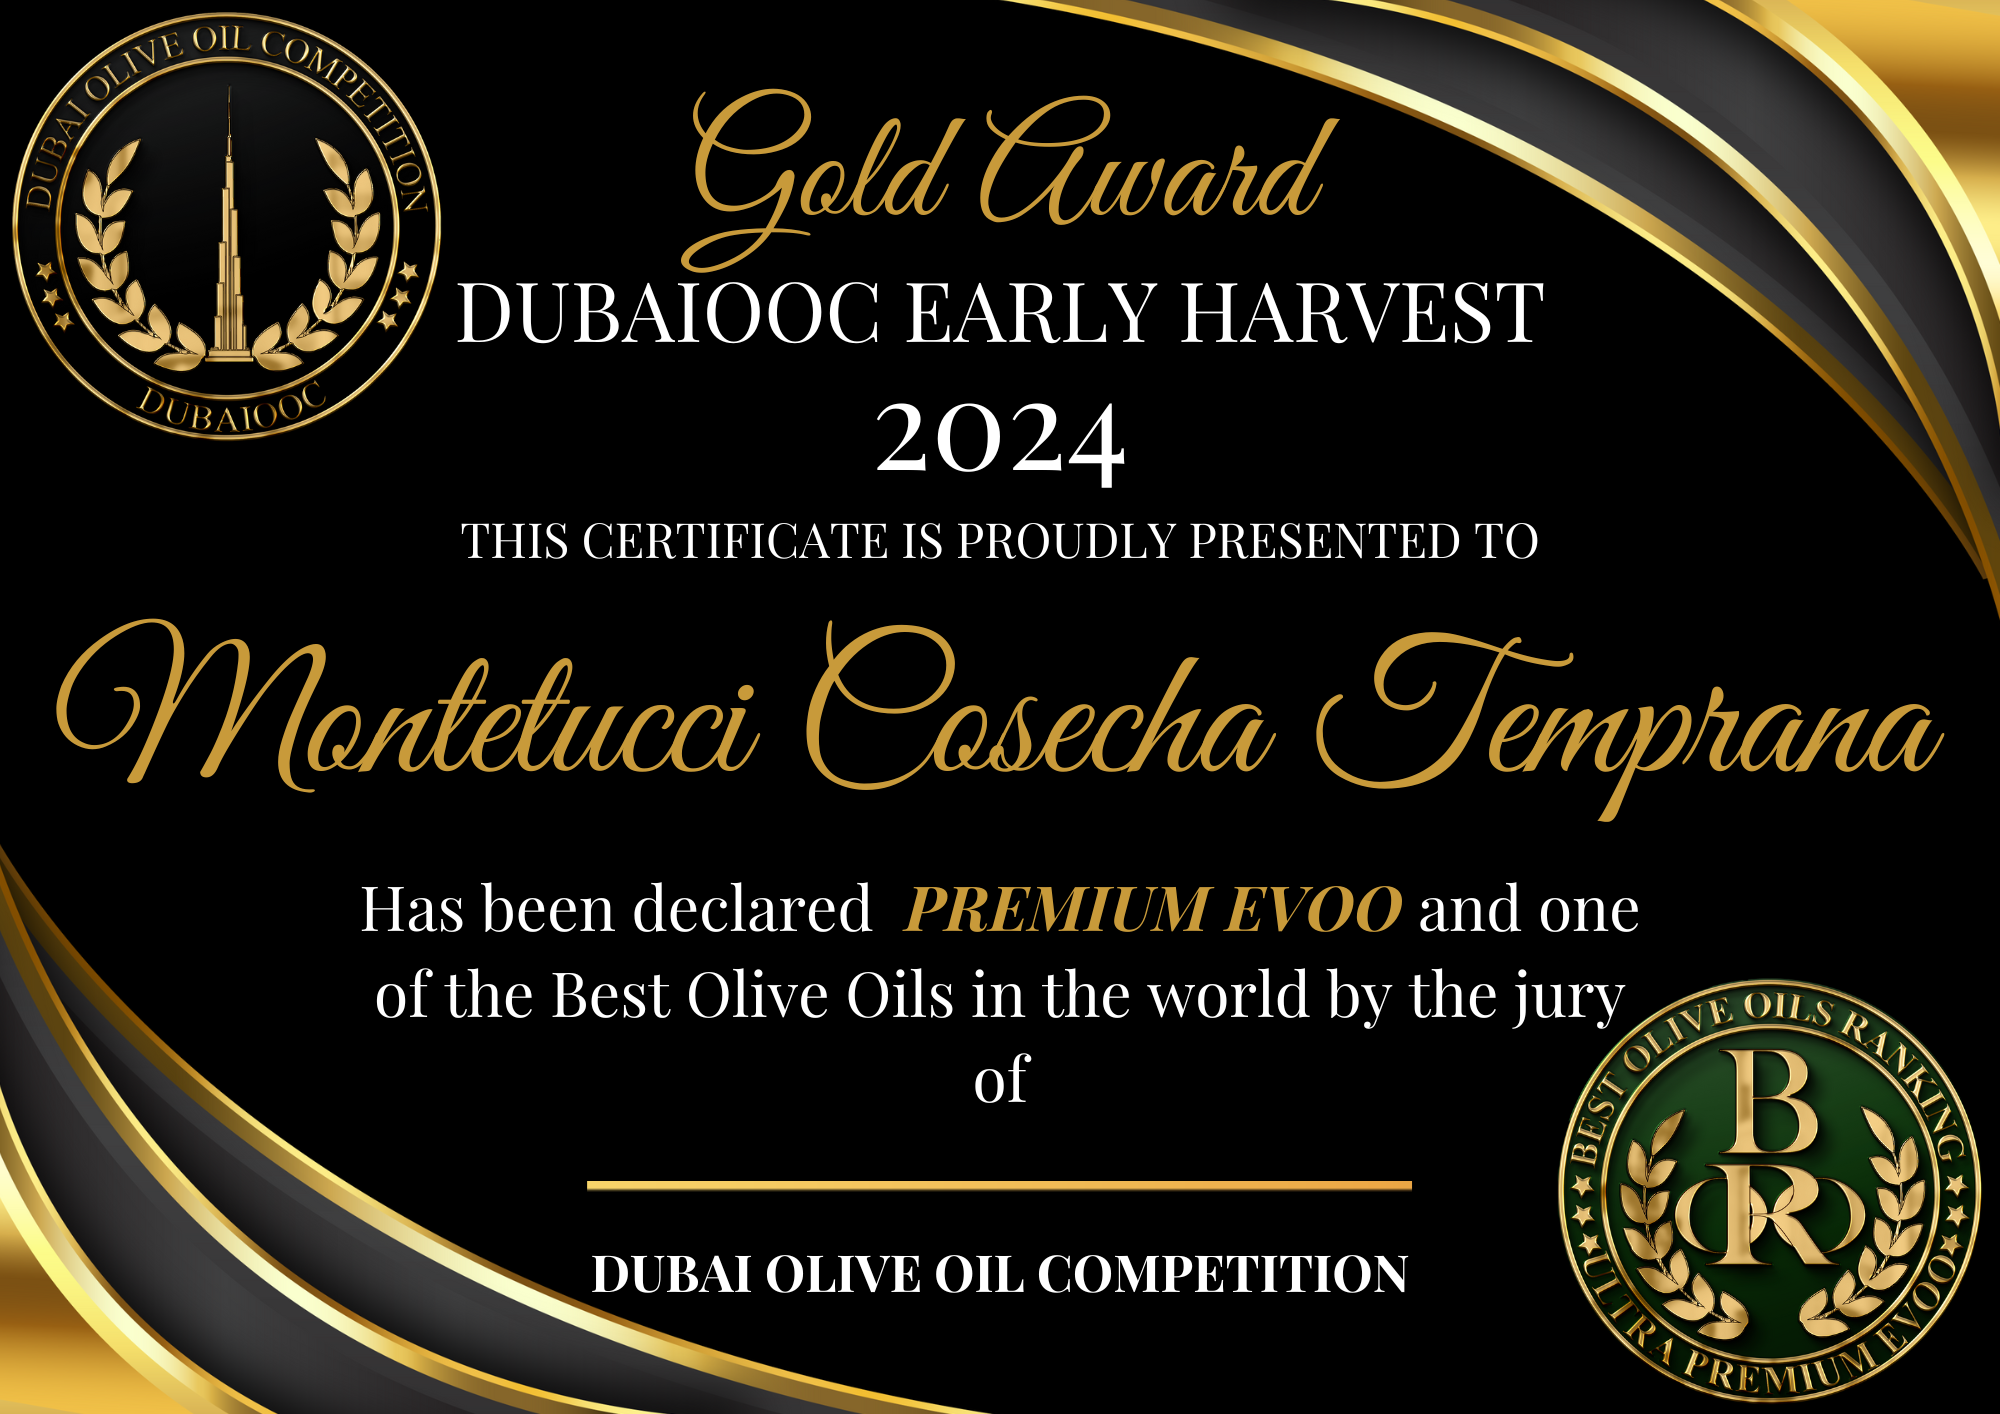 Montetucci Cosecha Temprana certificate.png__PID:a9a25586-e230-4b2d-9eb8-8ee5416766b8